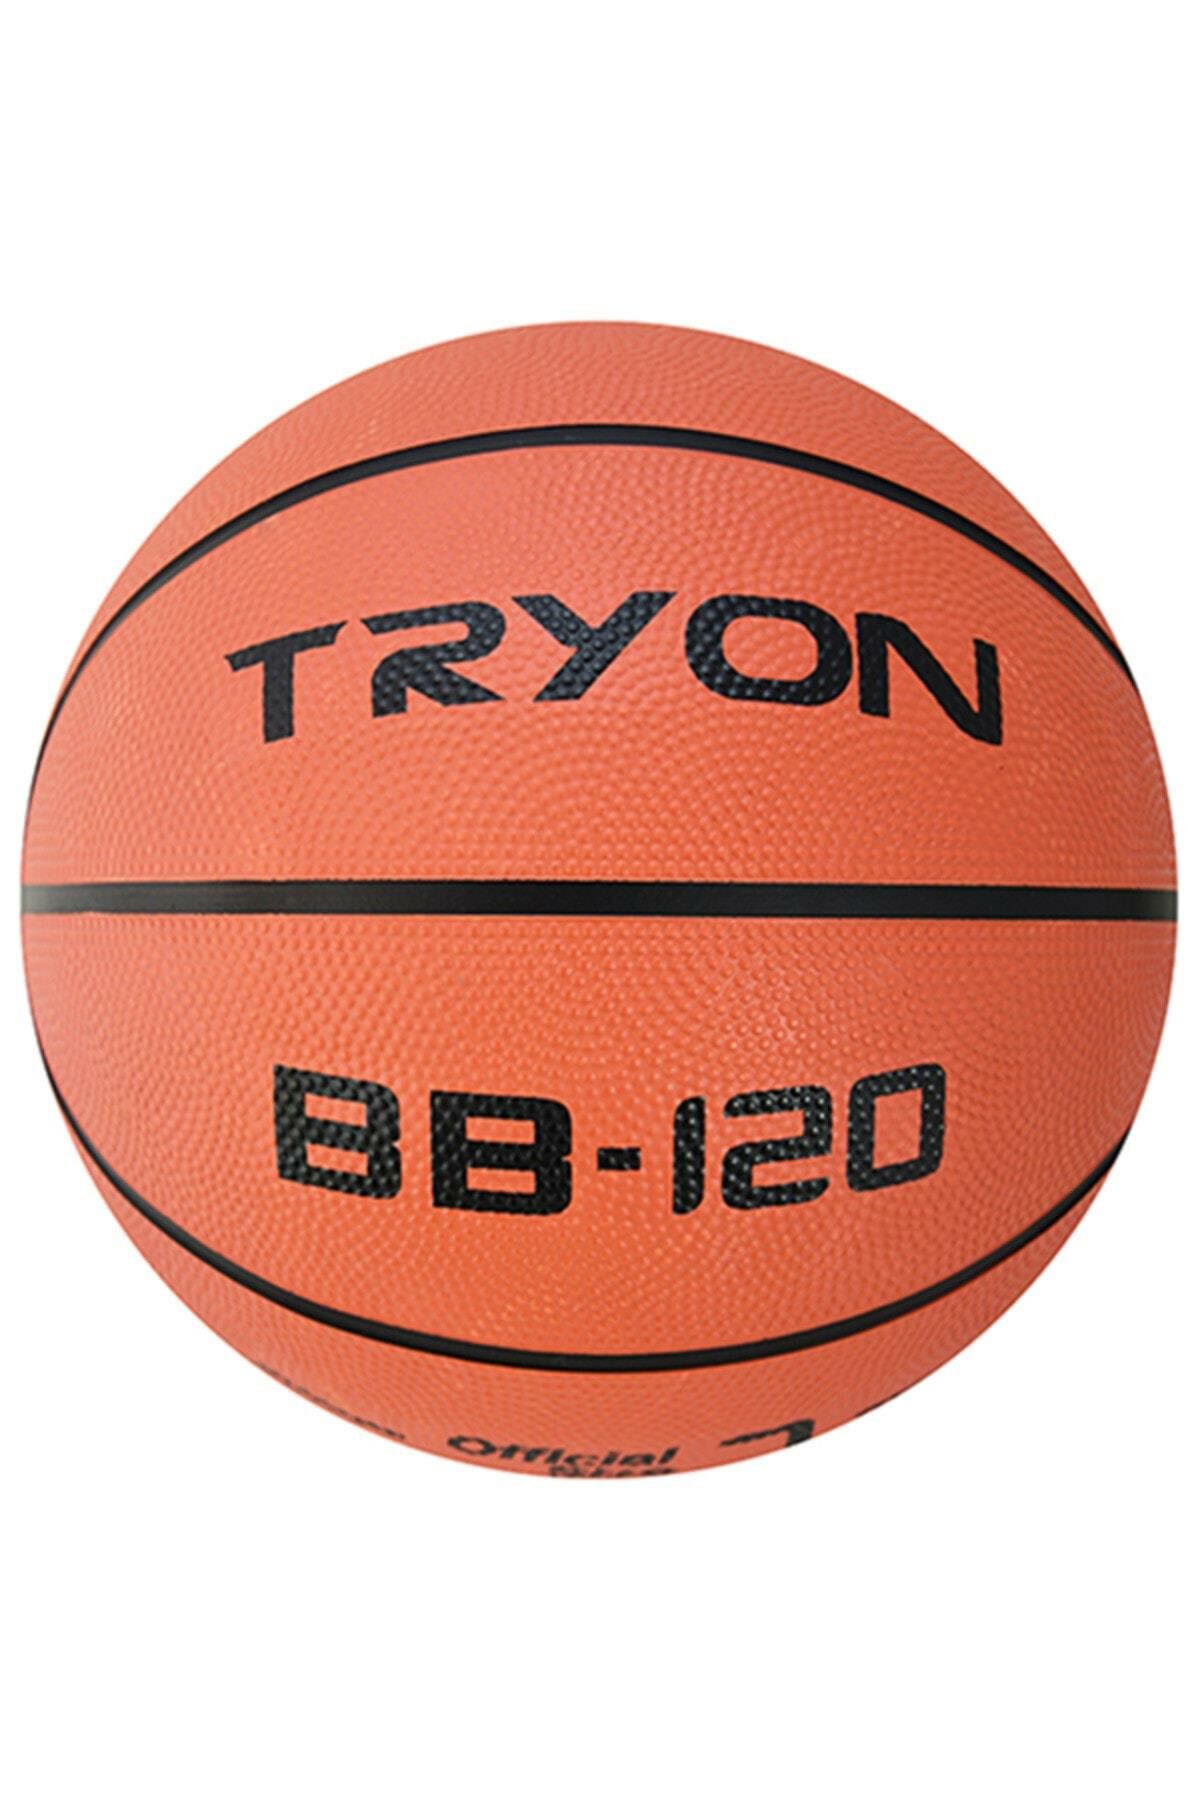 Tryon BB-120 Kauçuk 5 No Basketbol Topu